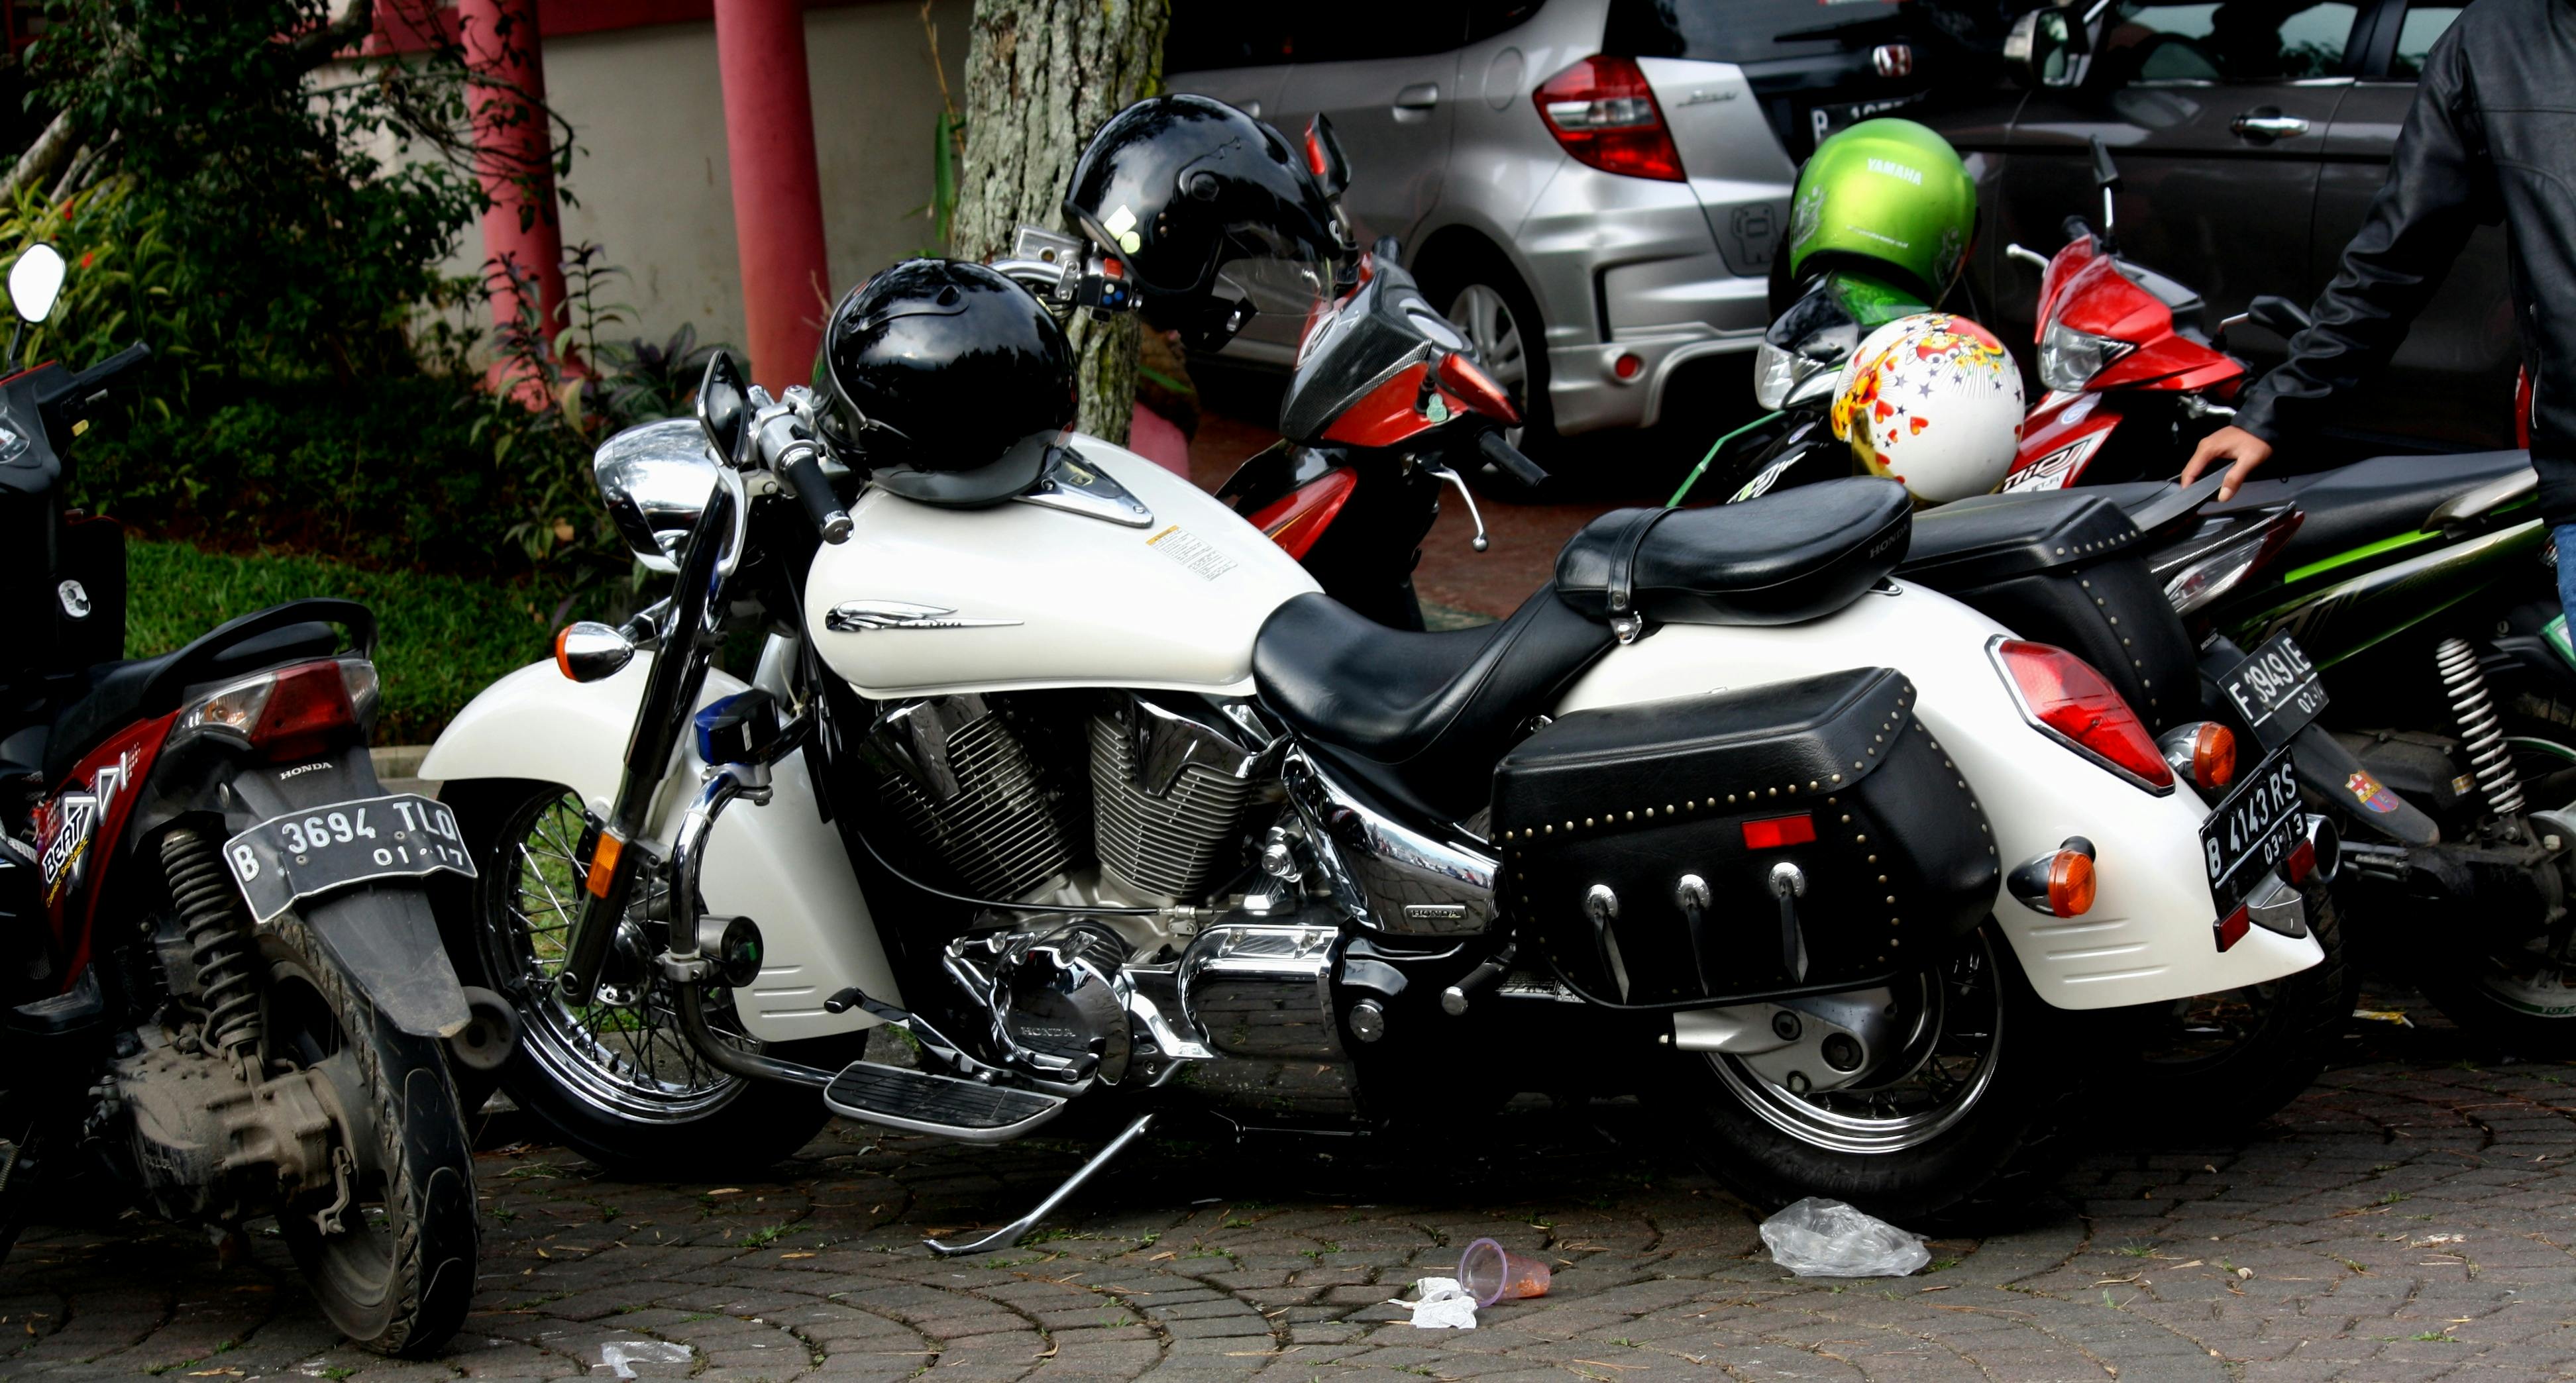 Free stock photo of motor bike, motor vehicles